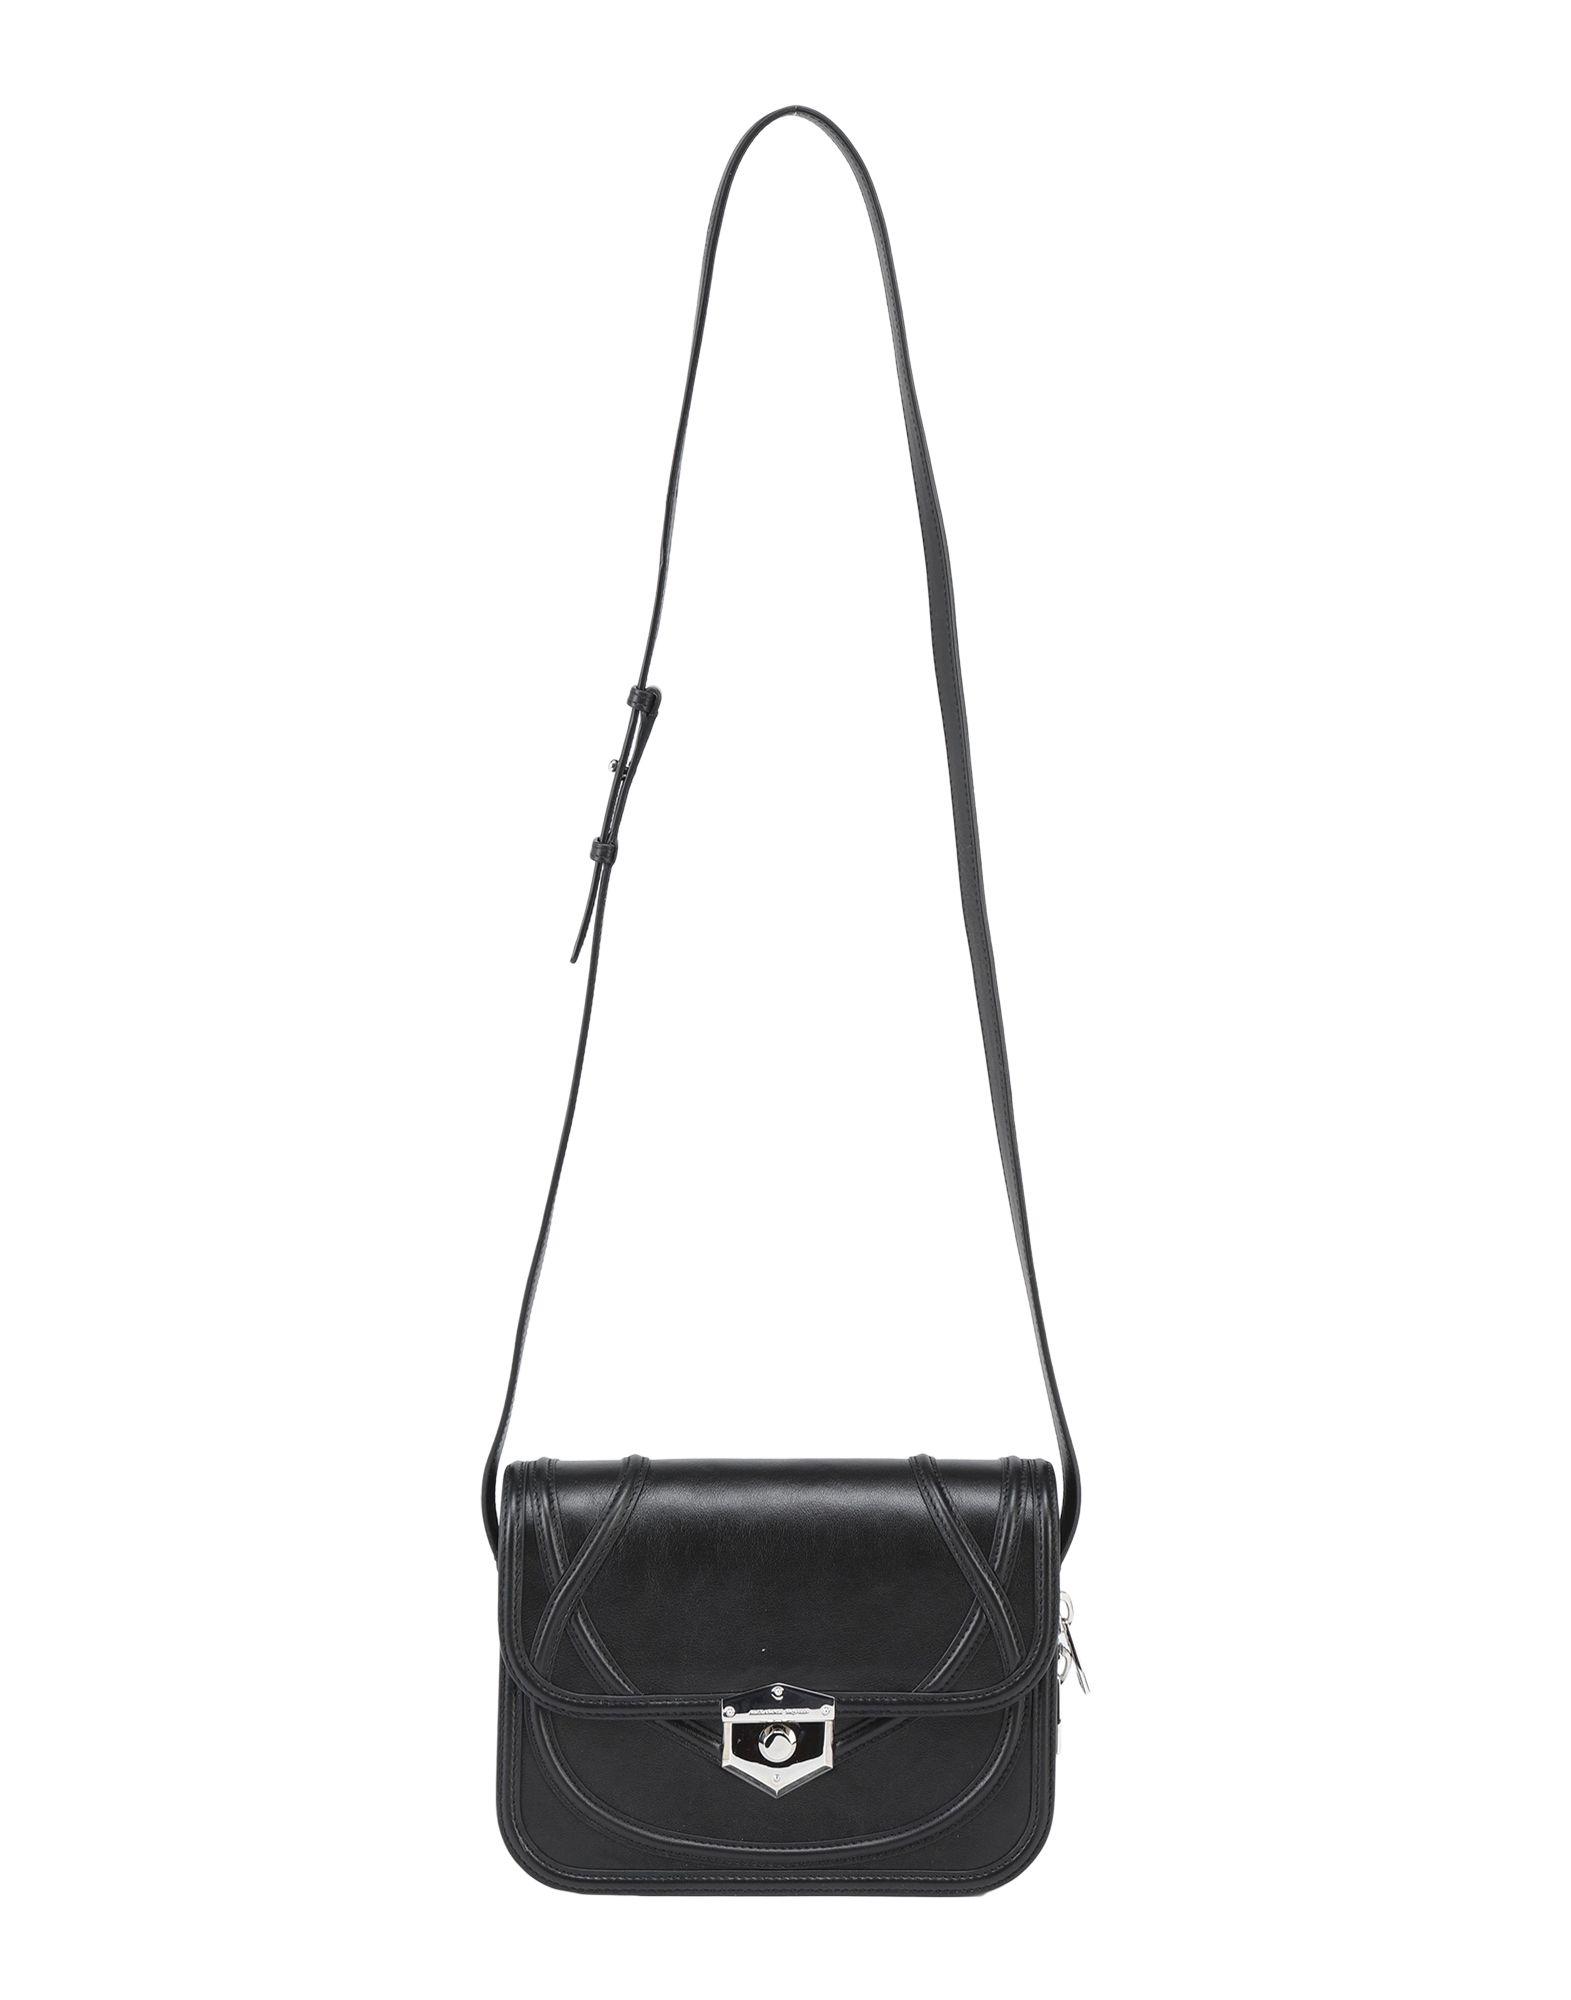 Alexander McQueen Leather Cross-body Bag in Black - Lyst